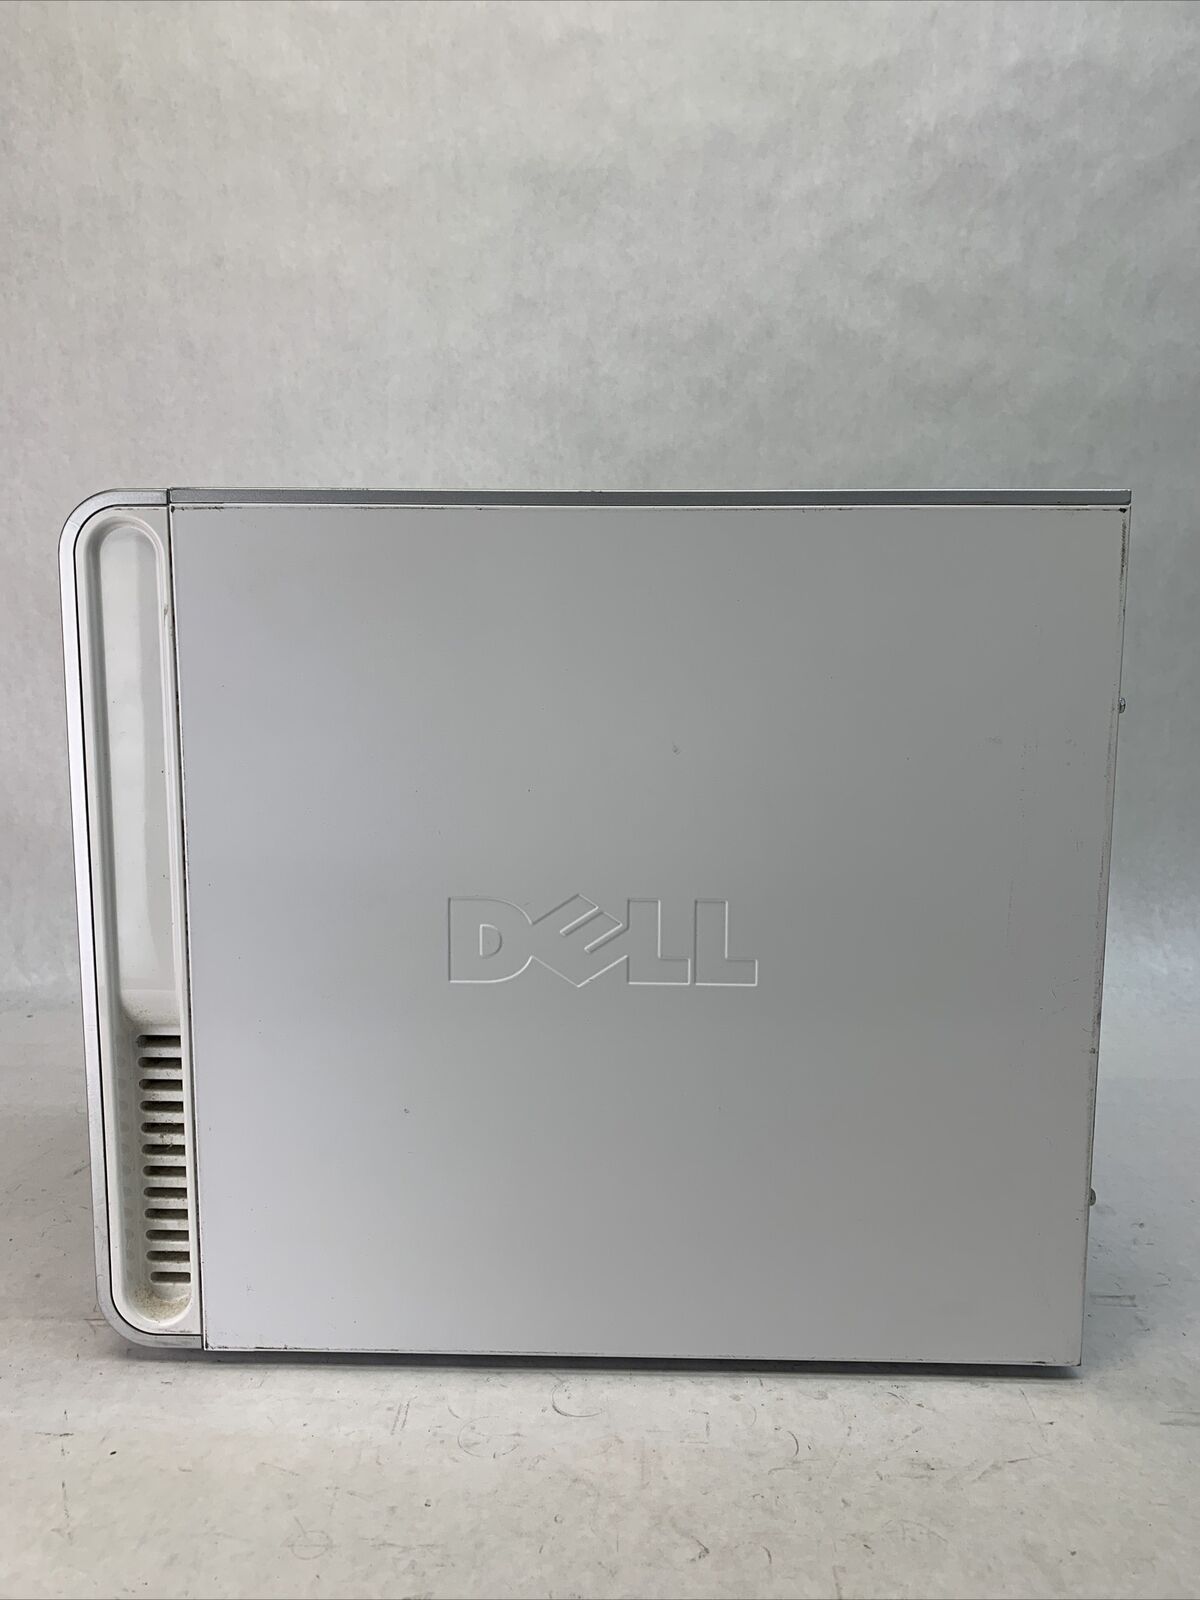 Dell Inspiron 531 MT AMD Sempron LE-1300 2.3GHz 2GB RAM No HDD No OS